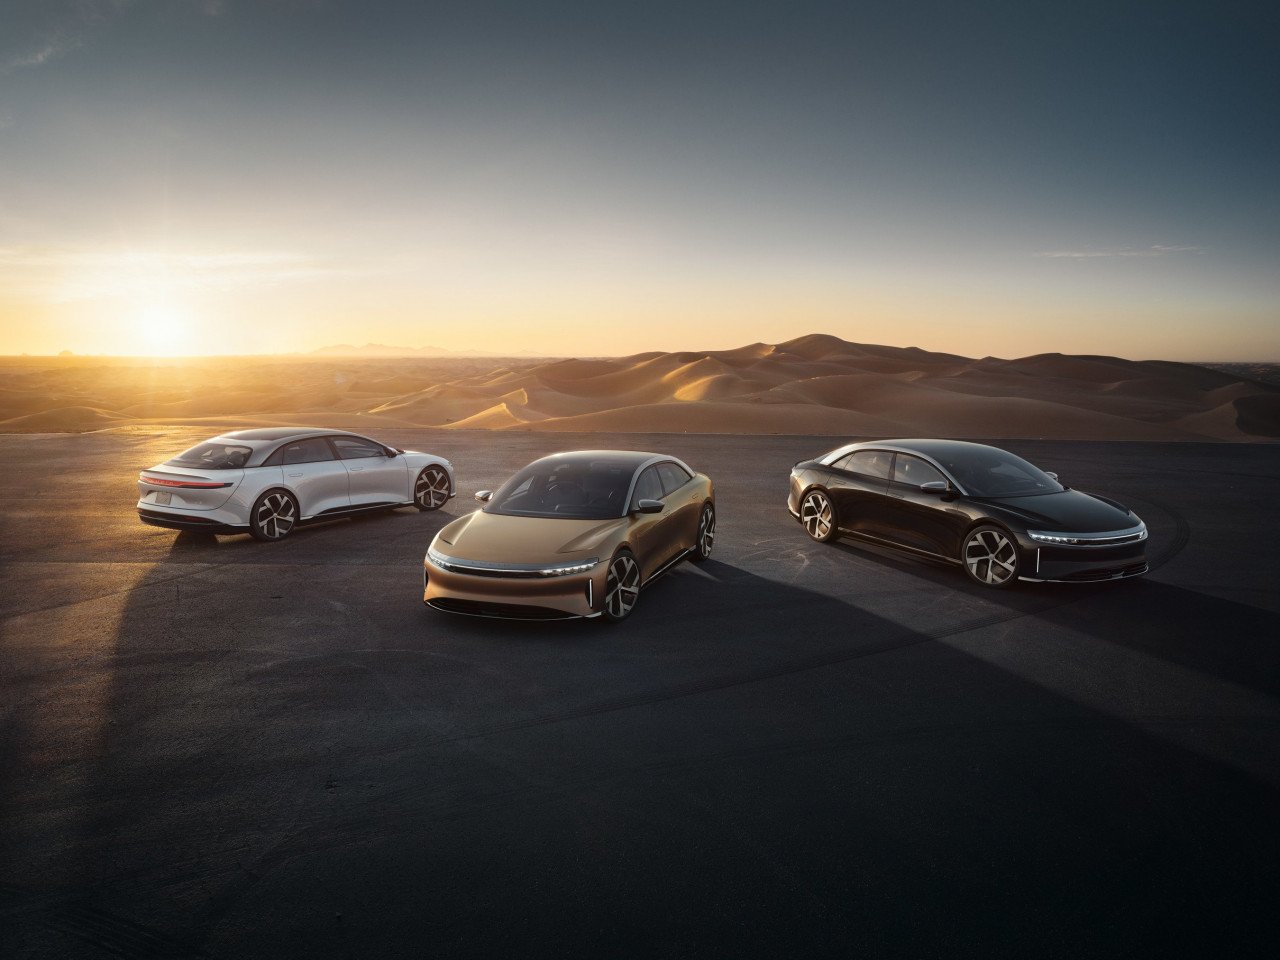 Tesla rival Lucid raises $3 billion amid falling sales